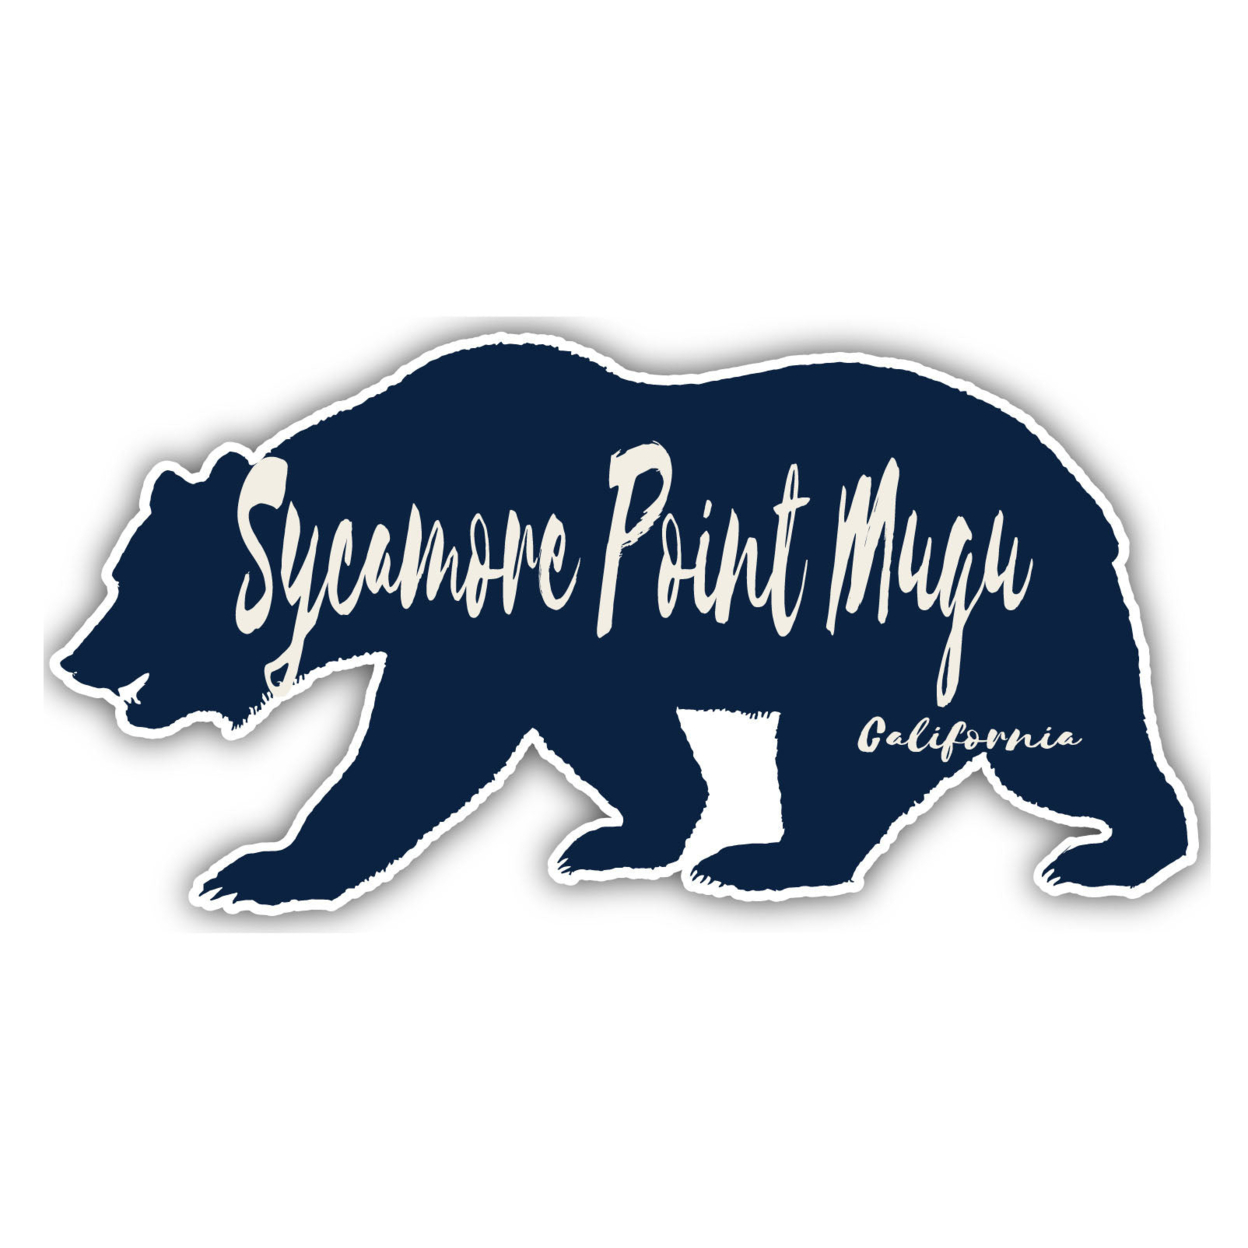 Sycamore Point Mugu California Souvenir Decorative Stickers (Choose Theme And Size) - Single Unit, 4-Inch, Bear